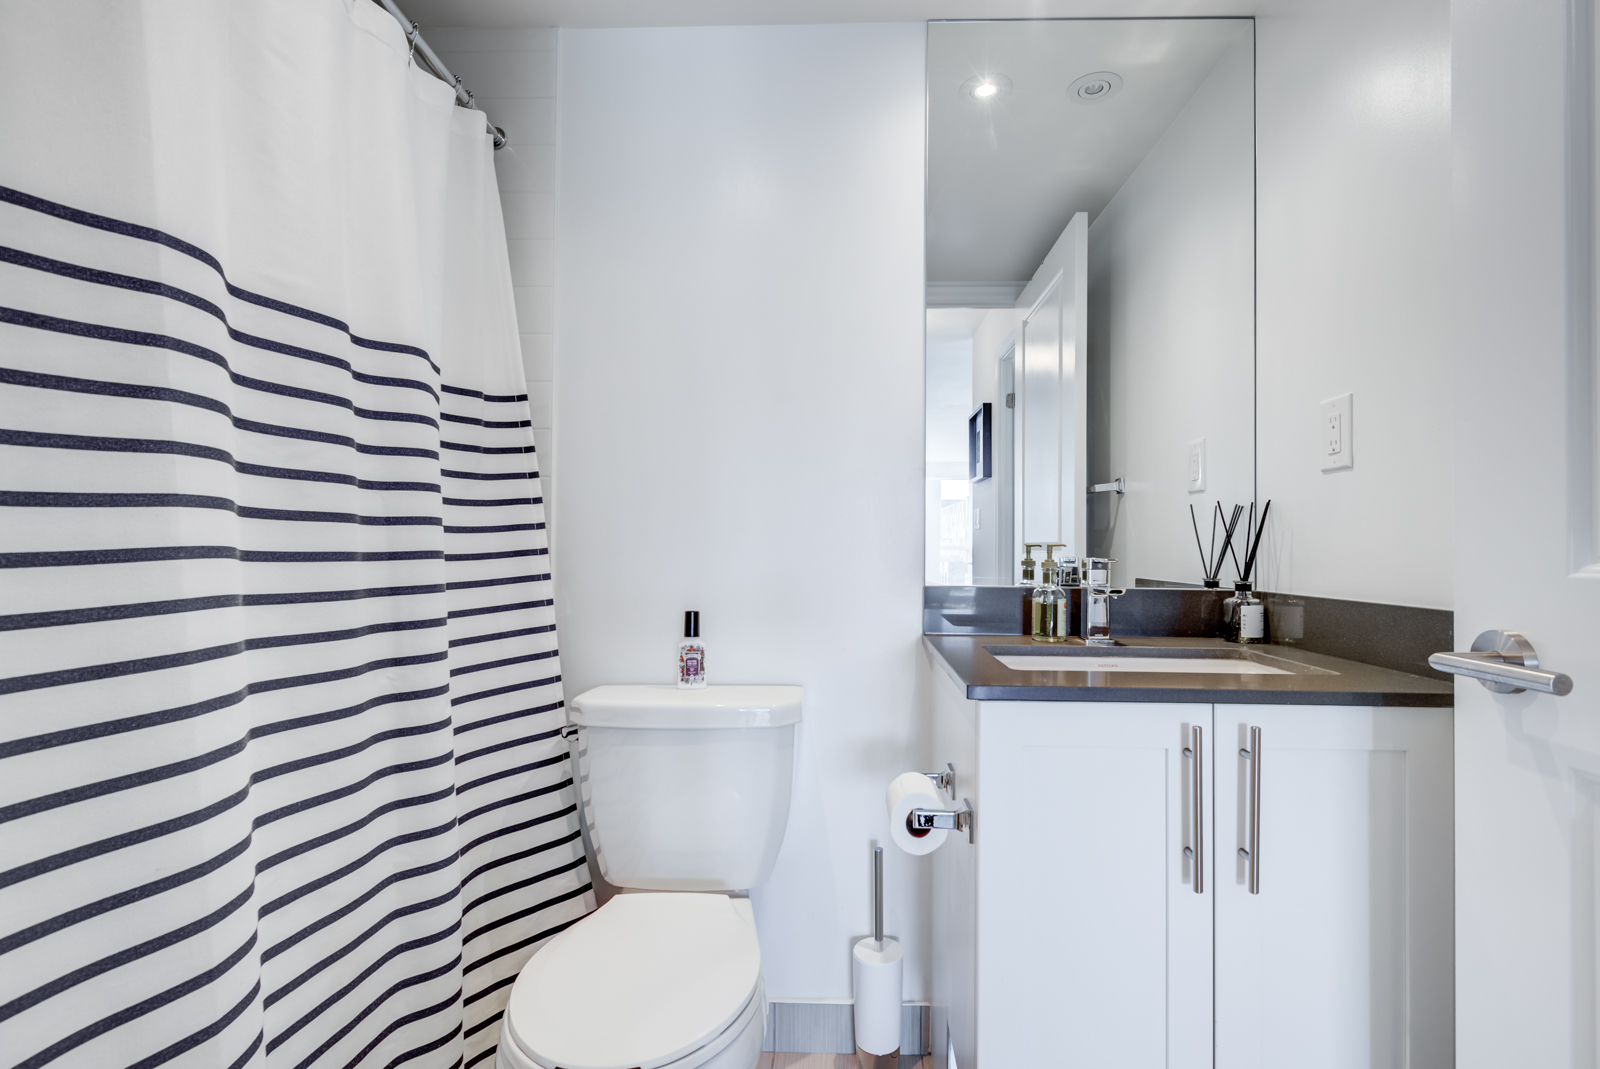 Bathroom in monochromes, striped shower curtain and sleek vanity.